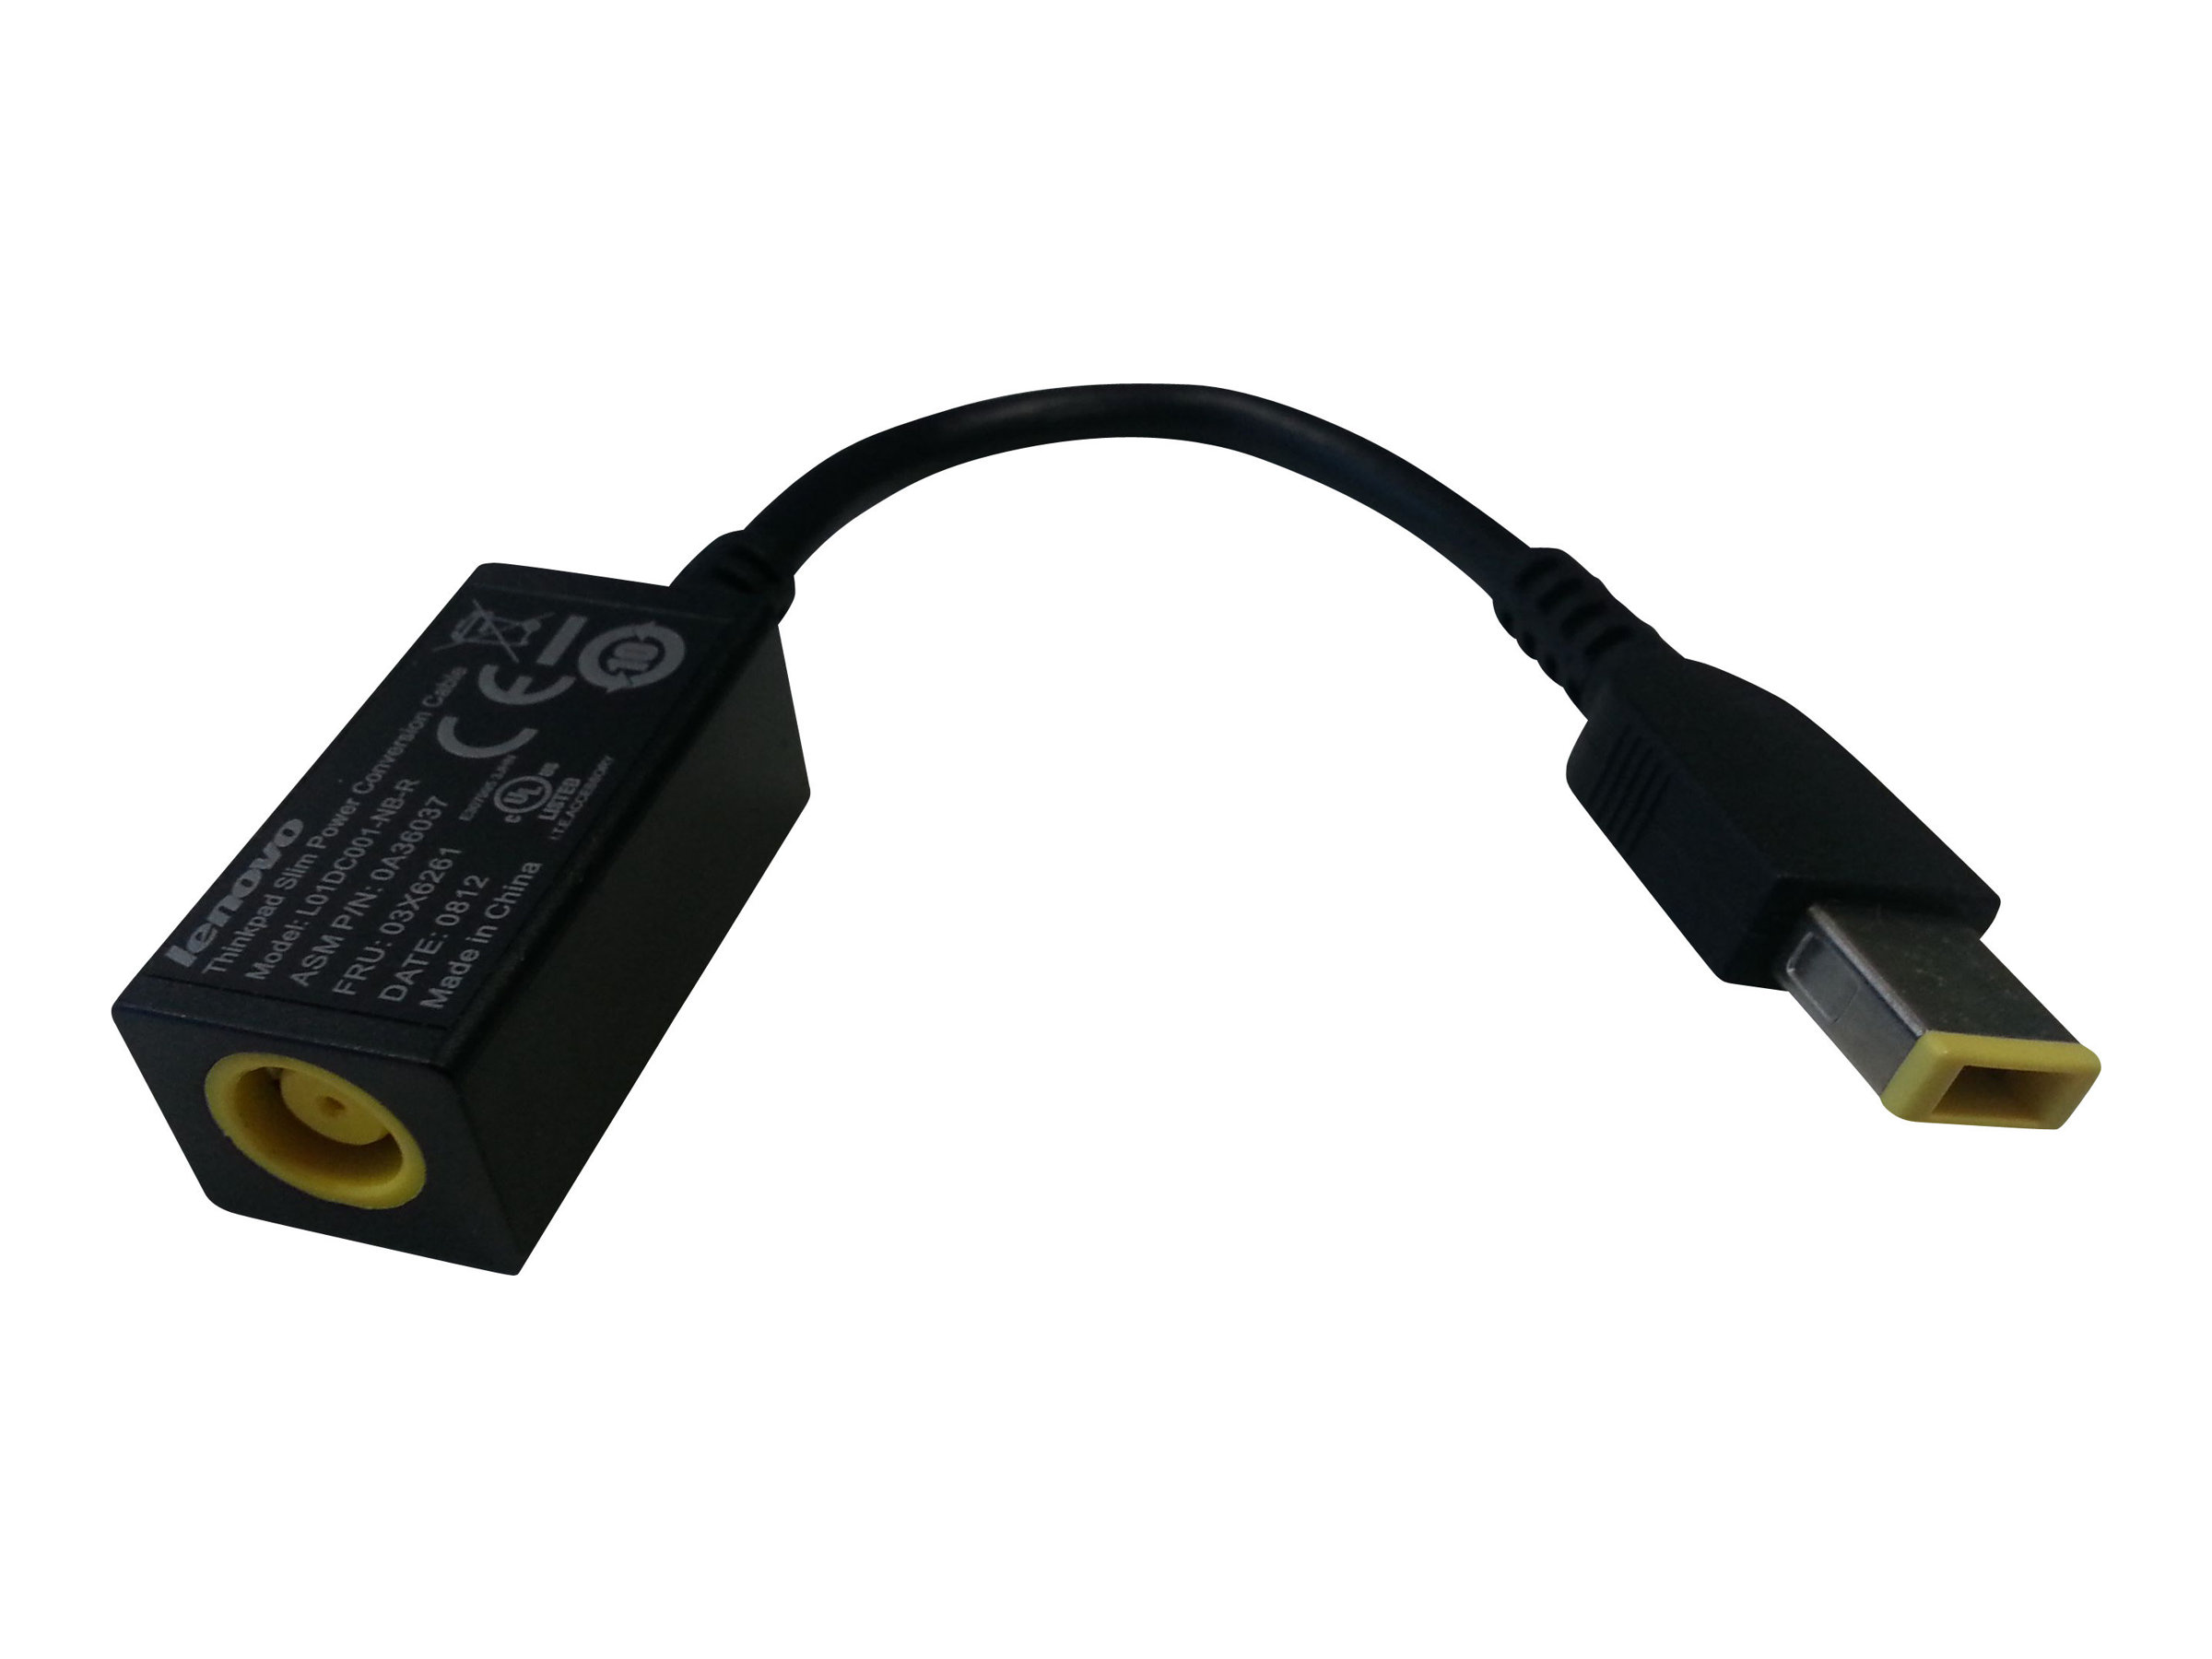 LENOVO 0B47046 ThinkPad Slim Power Conversion Cable (round Adaptor to Square X1 Carbon)